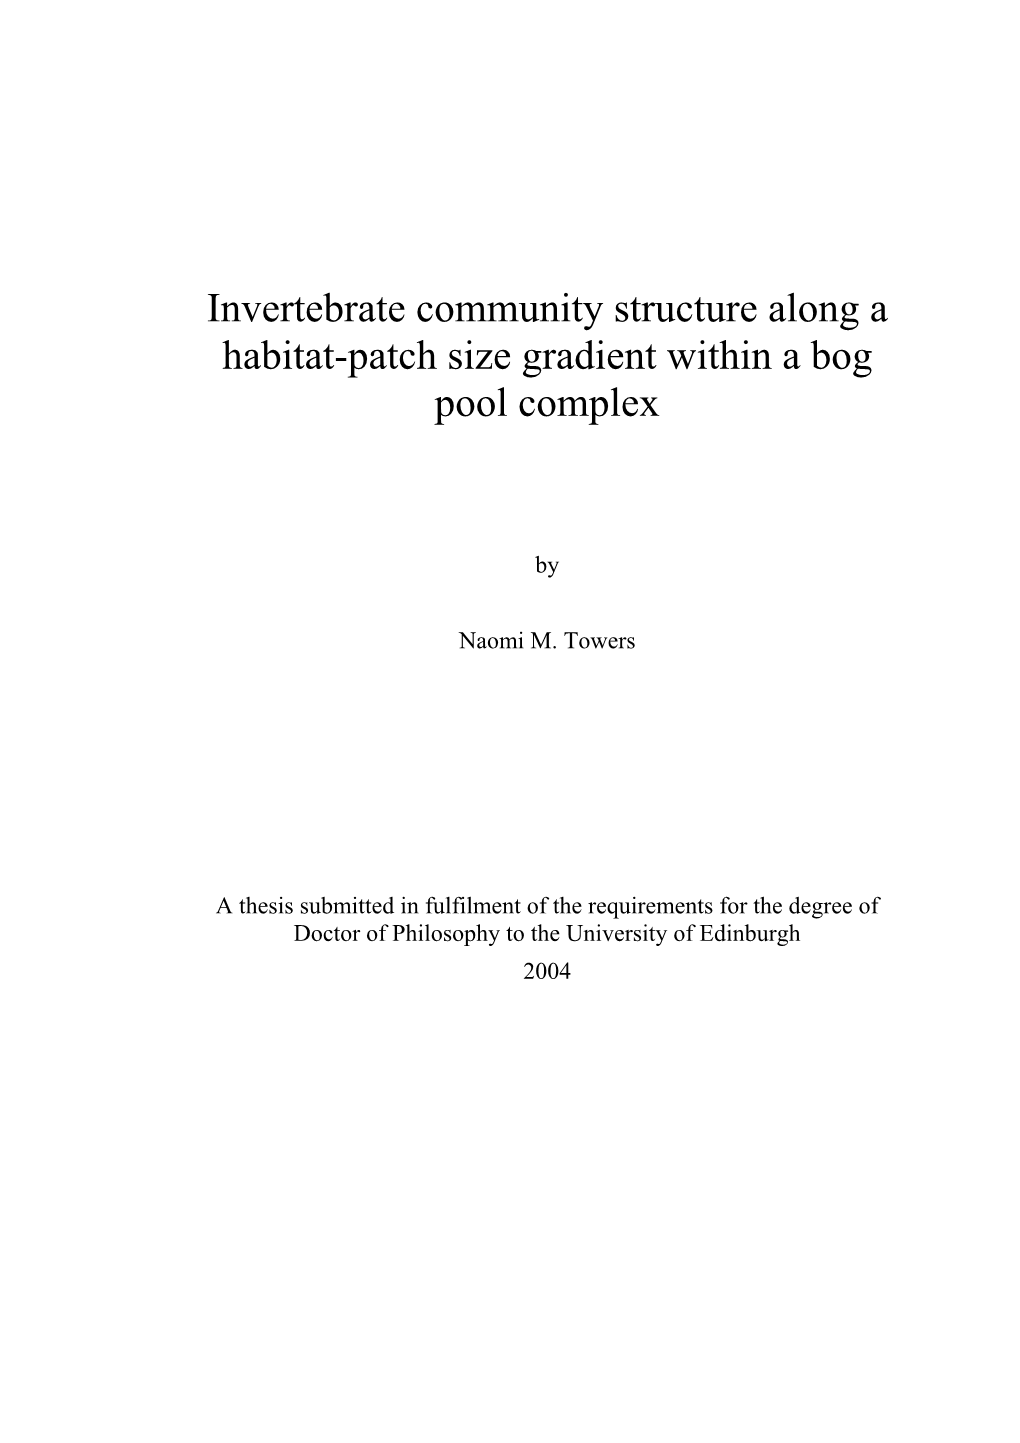 Invertebrate Community Structure Along a Habitat-Patch Size Gradient Within a Bog Pool Complex